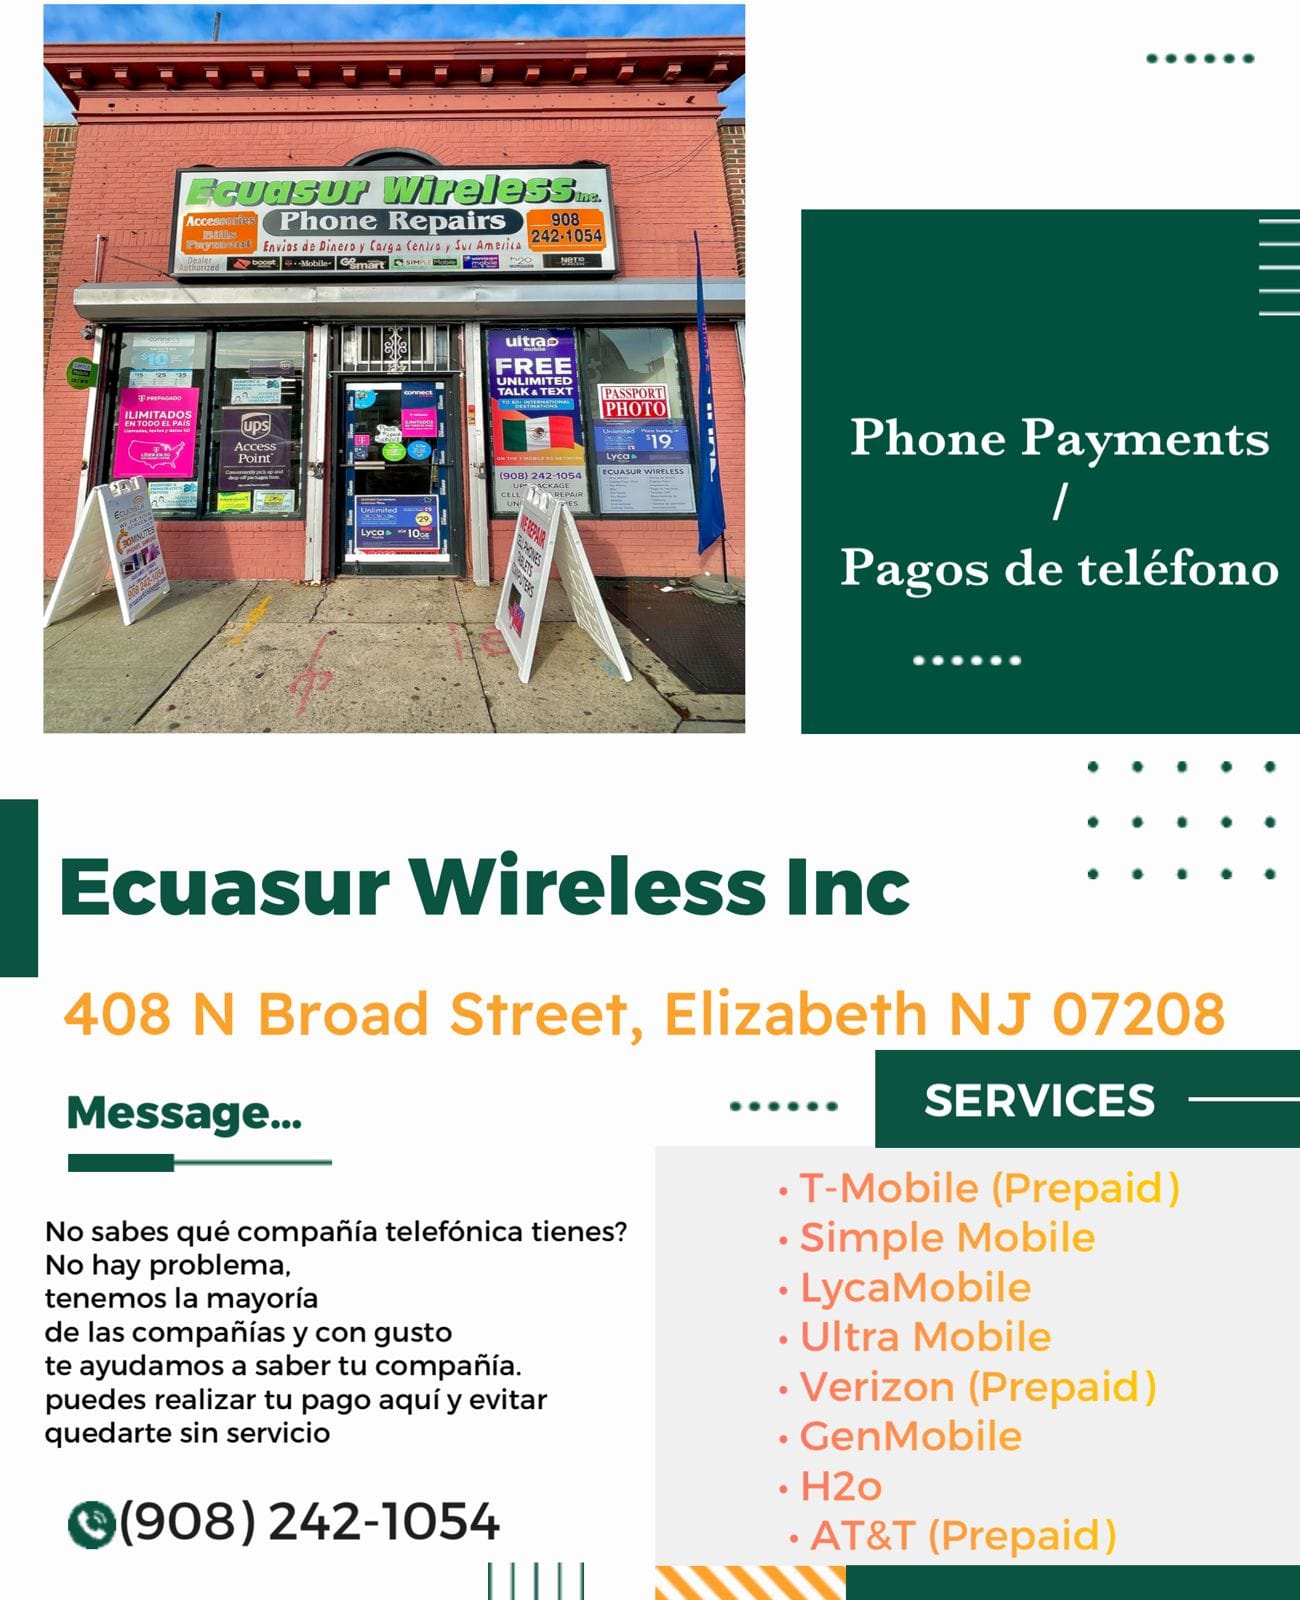 Ecuasur Wireless INC.